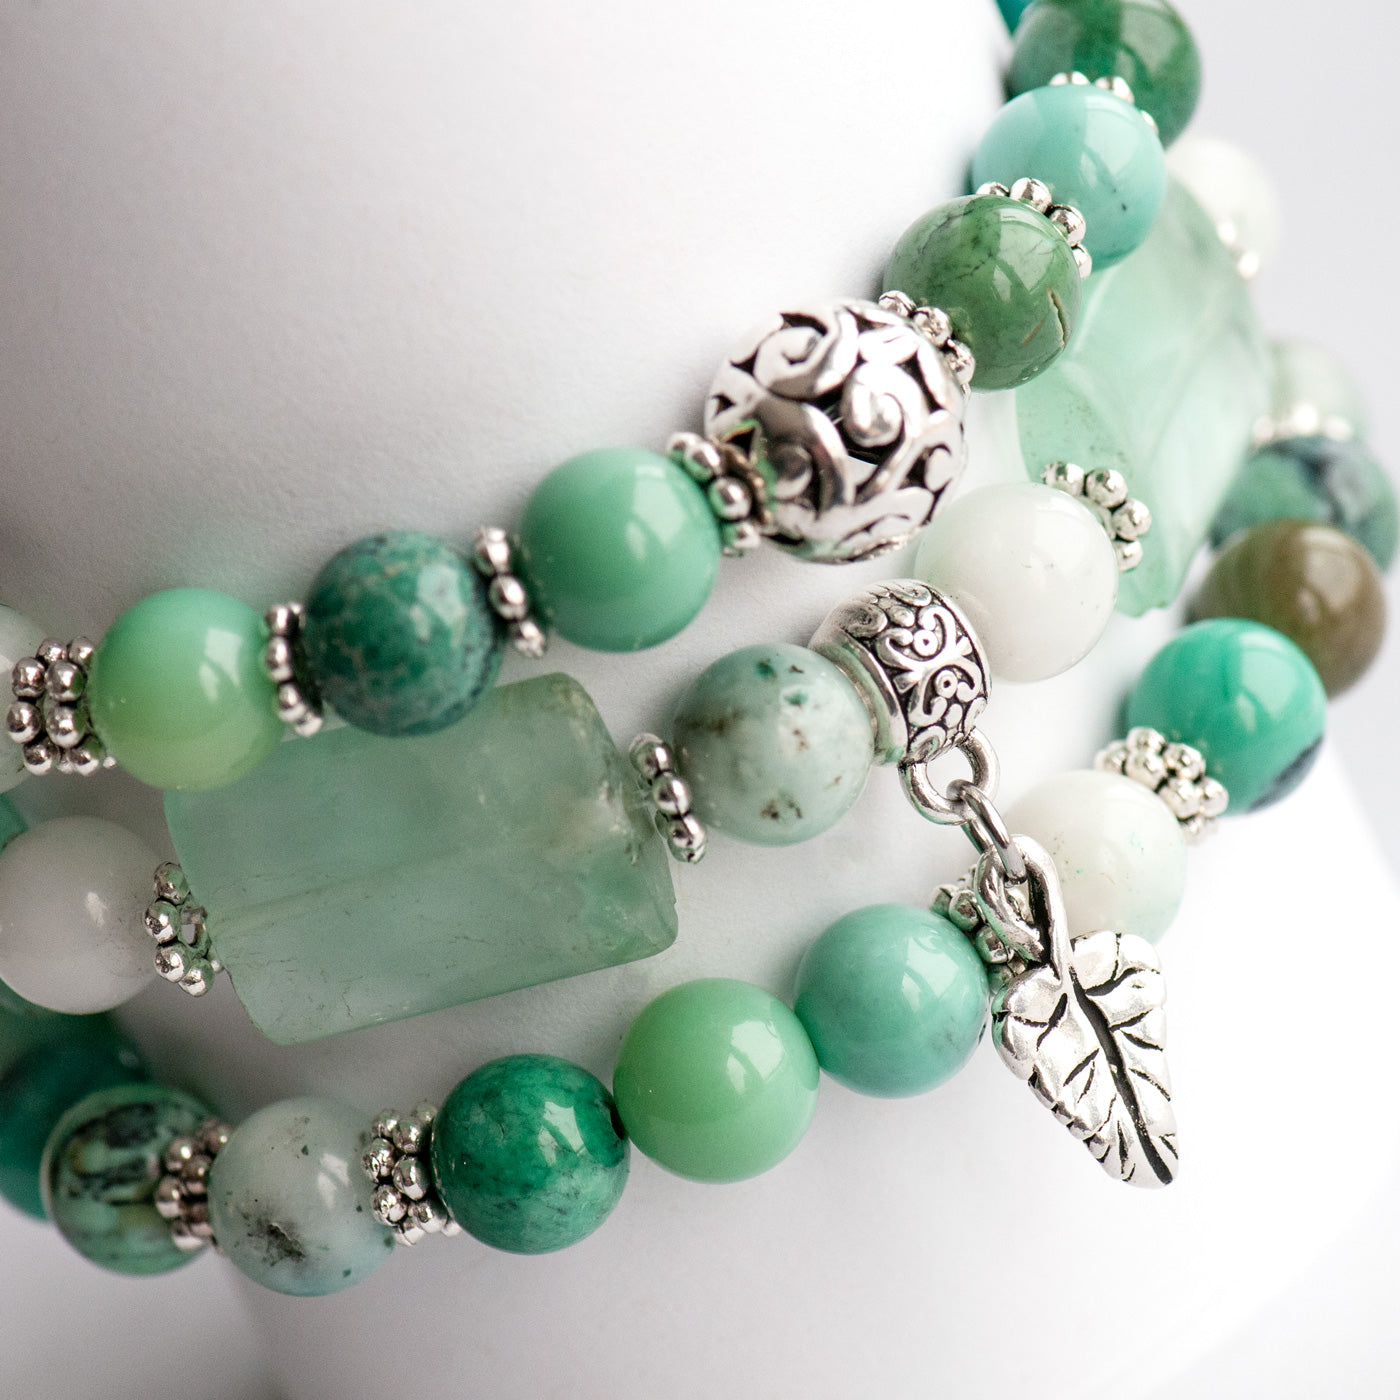 Handmade gemstone bracelet set with fluorite, green agate, and quartz beads